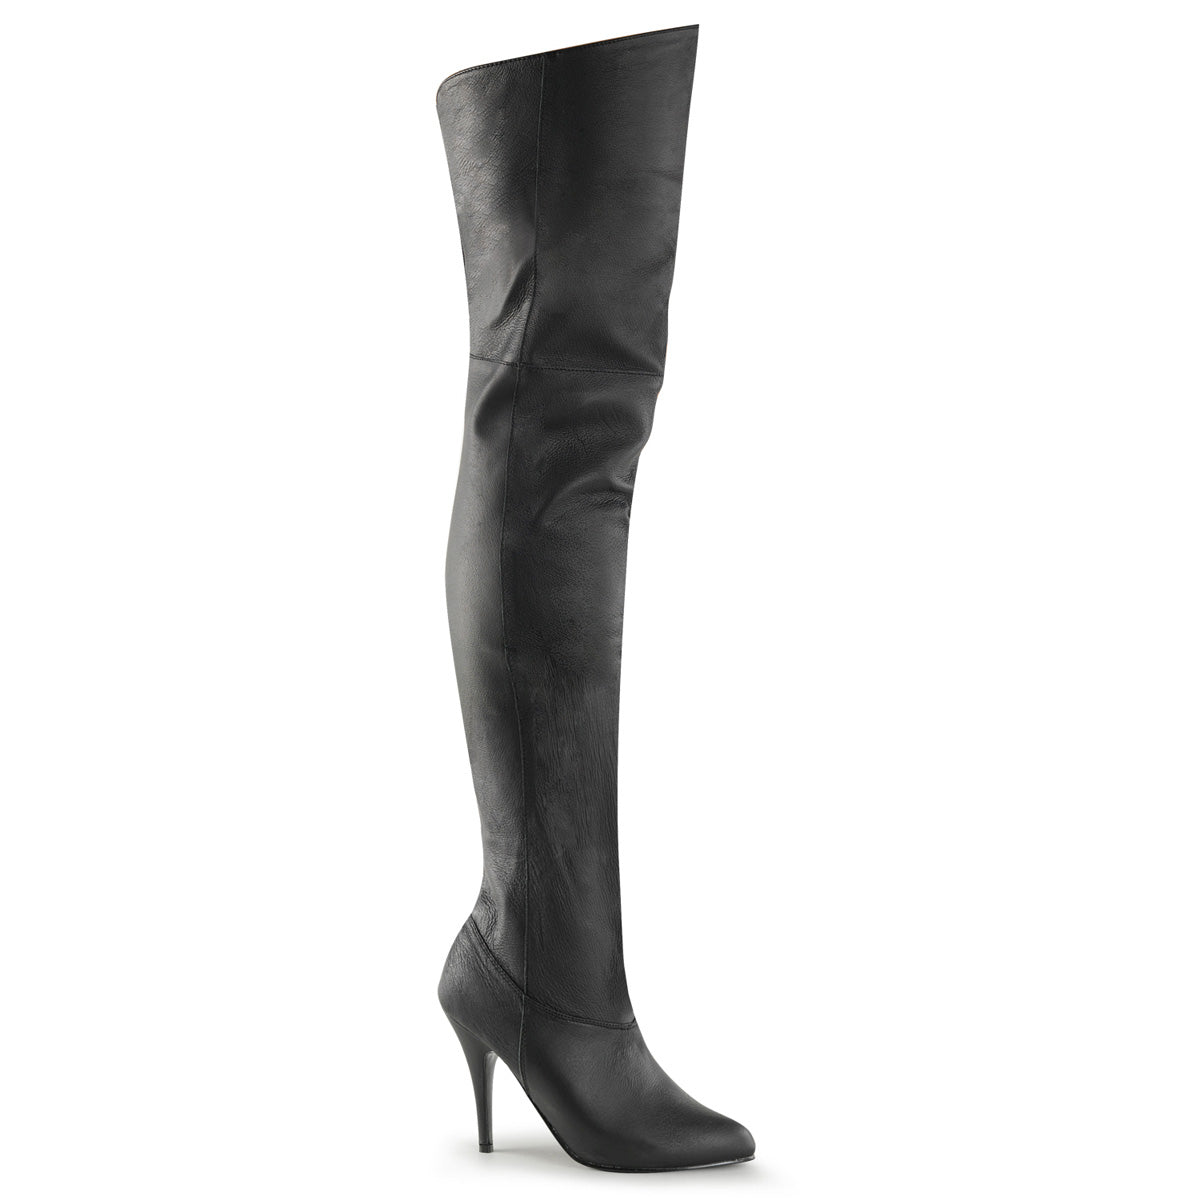 LEGEND-8868 Pleaser 4" Heel Black Leather Thigh High Boots